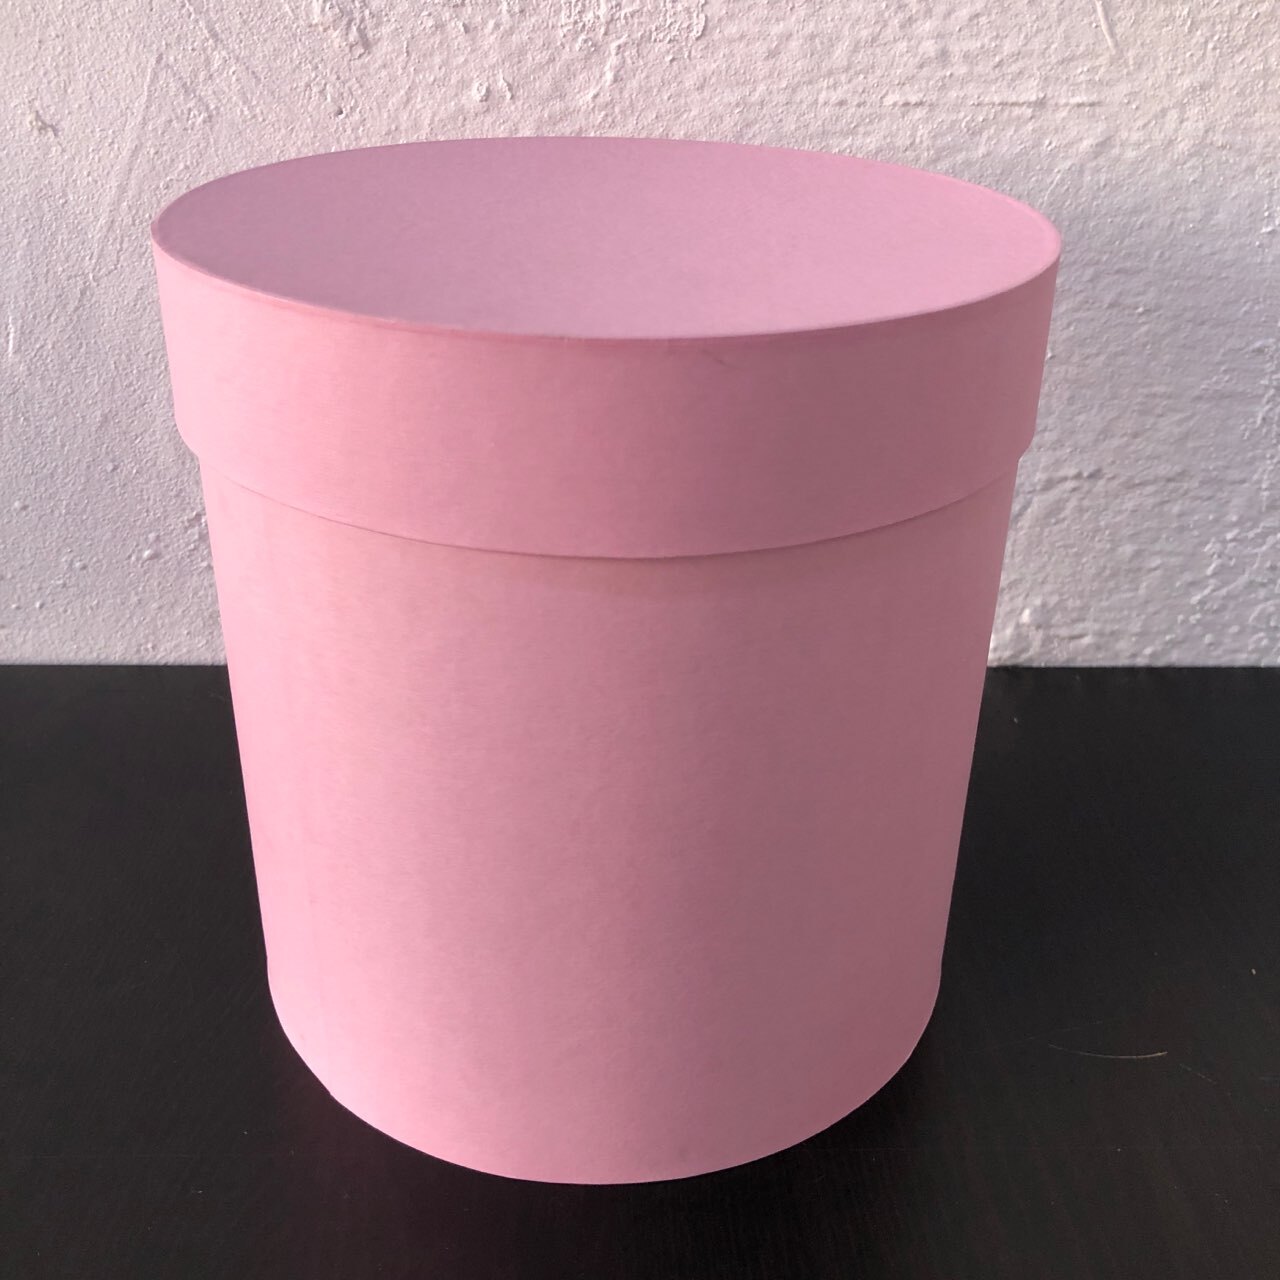 Цилиндр одиночный, 20х20 см, Розовый, 1 шт.